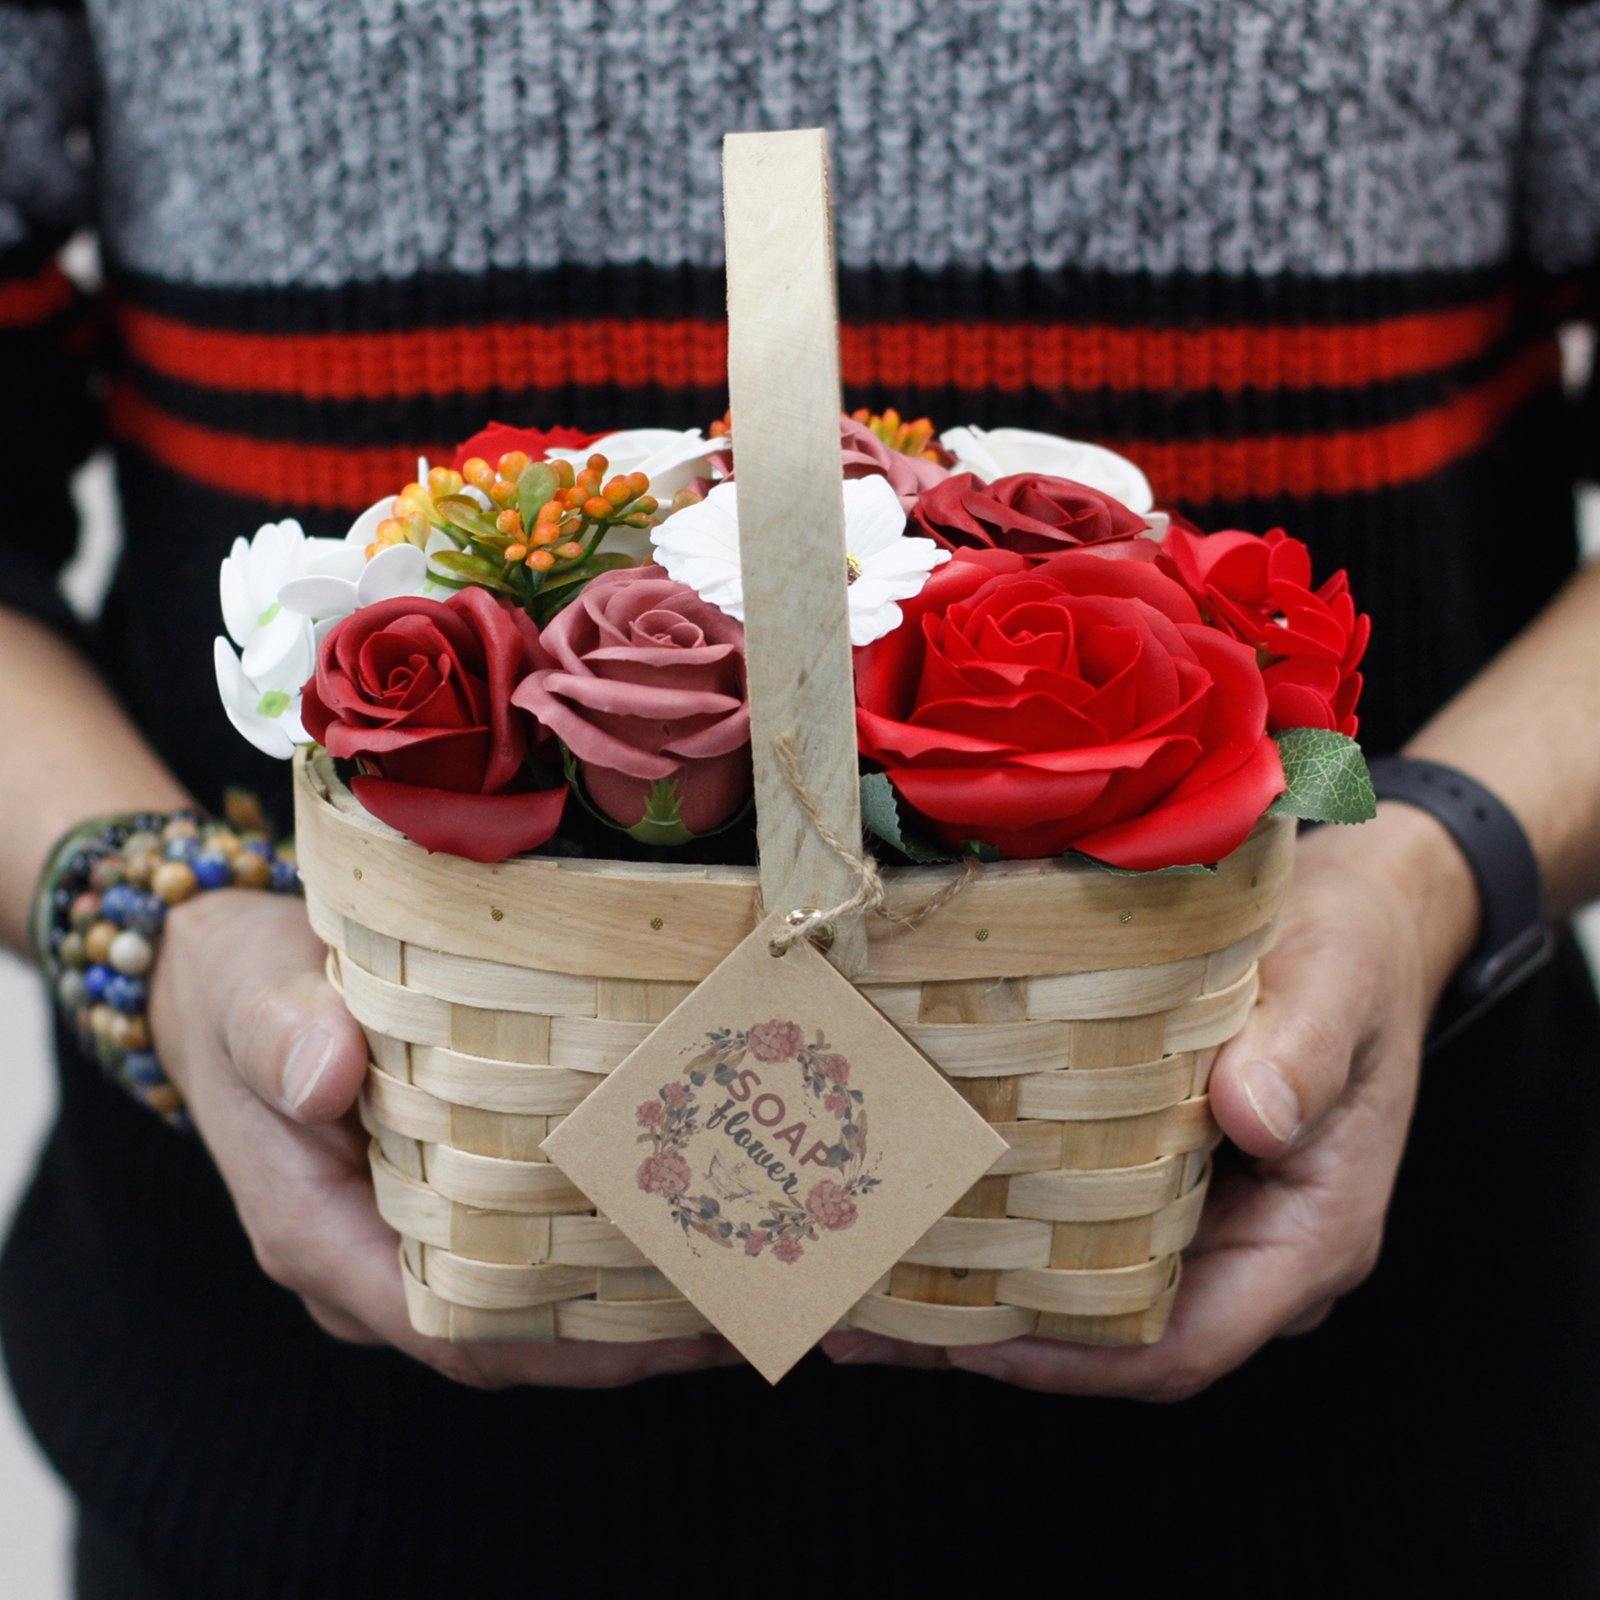 Scented Soap Red Flower Bouquet in Wicker Basket - Bath Spa Gift - Kporium Home & Garden